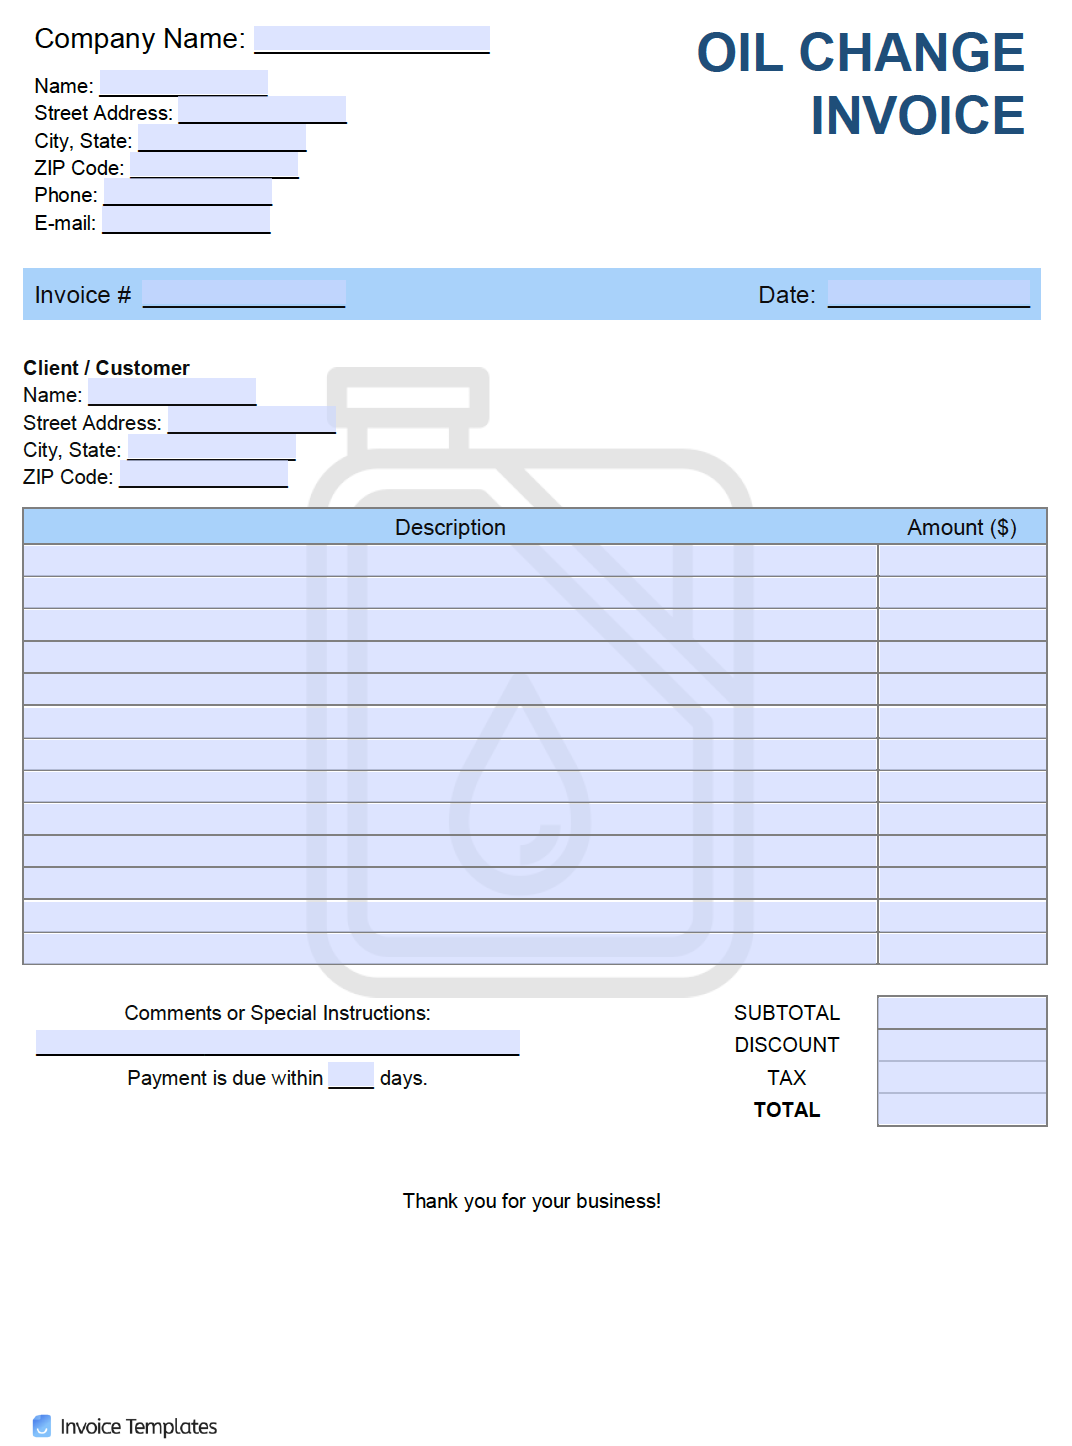 printable service invoice template